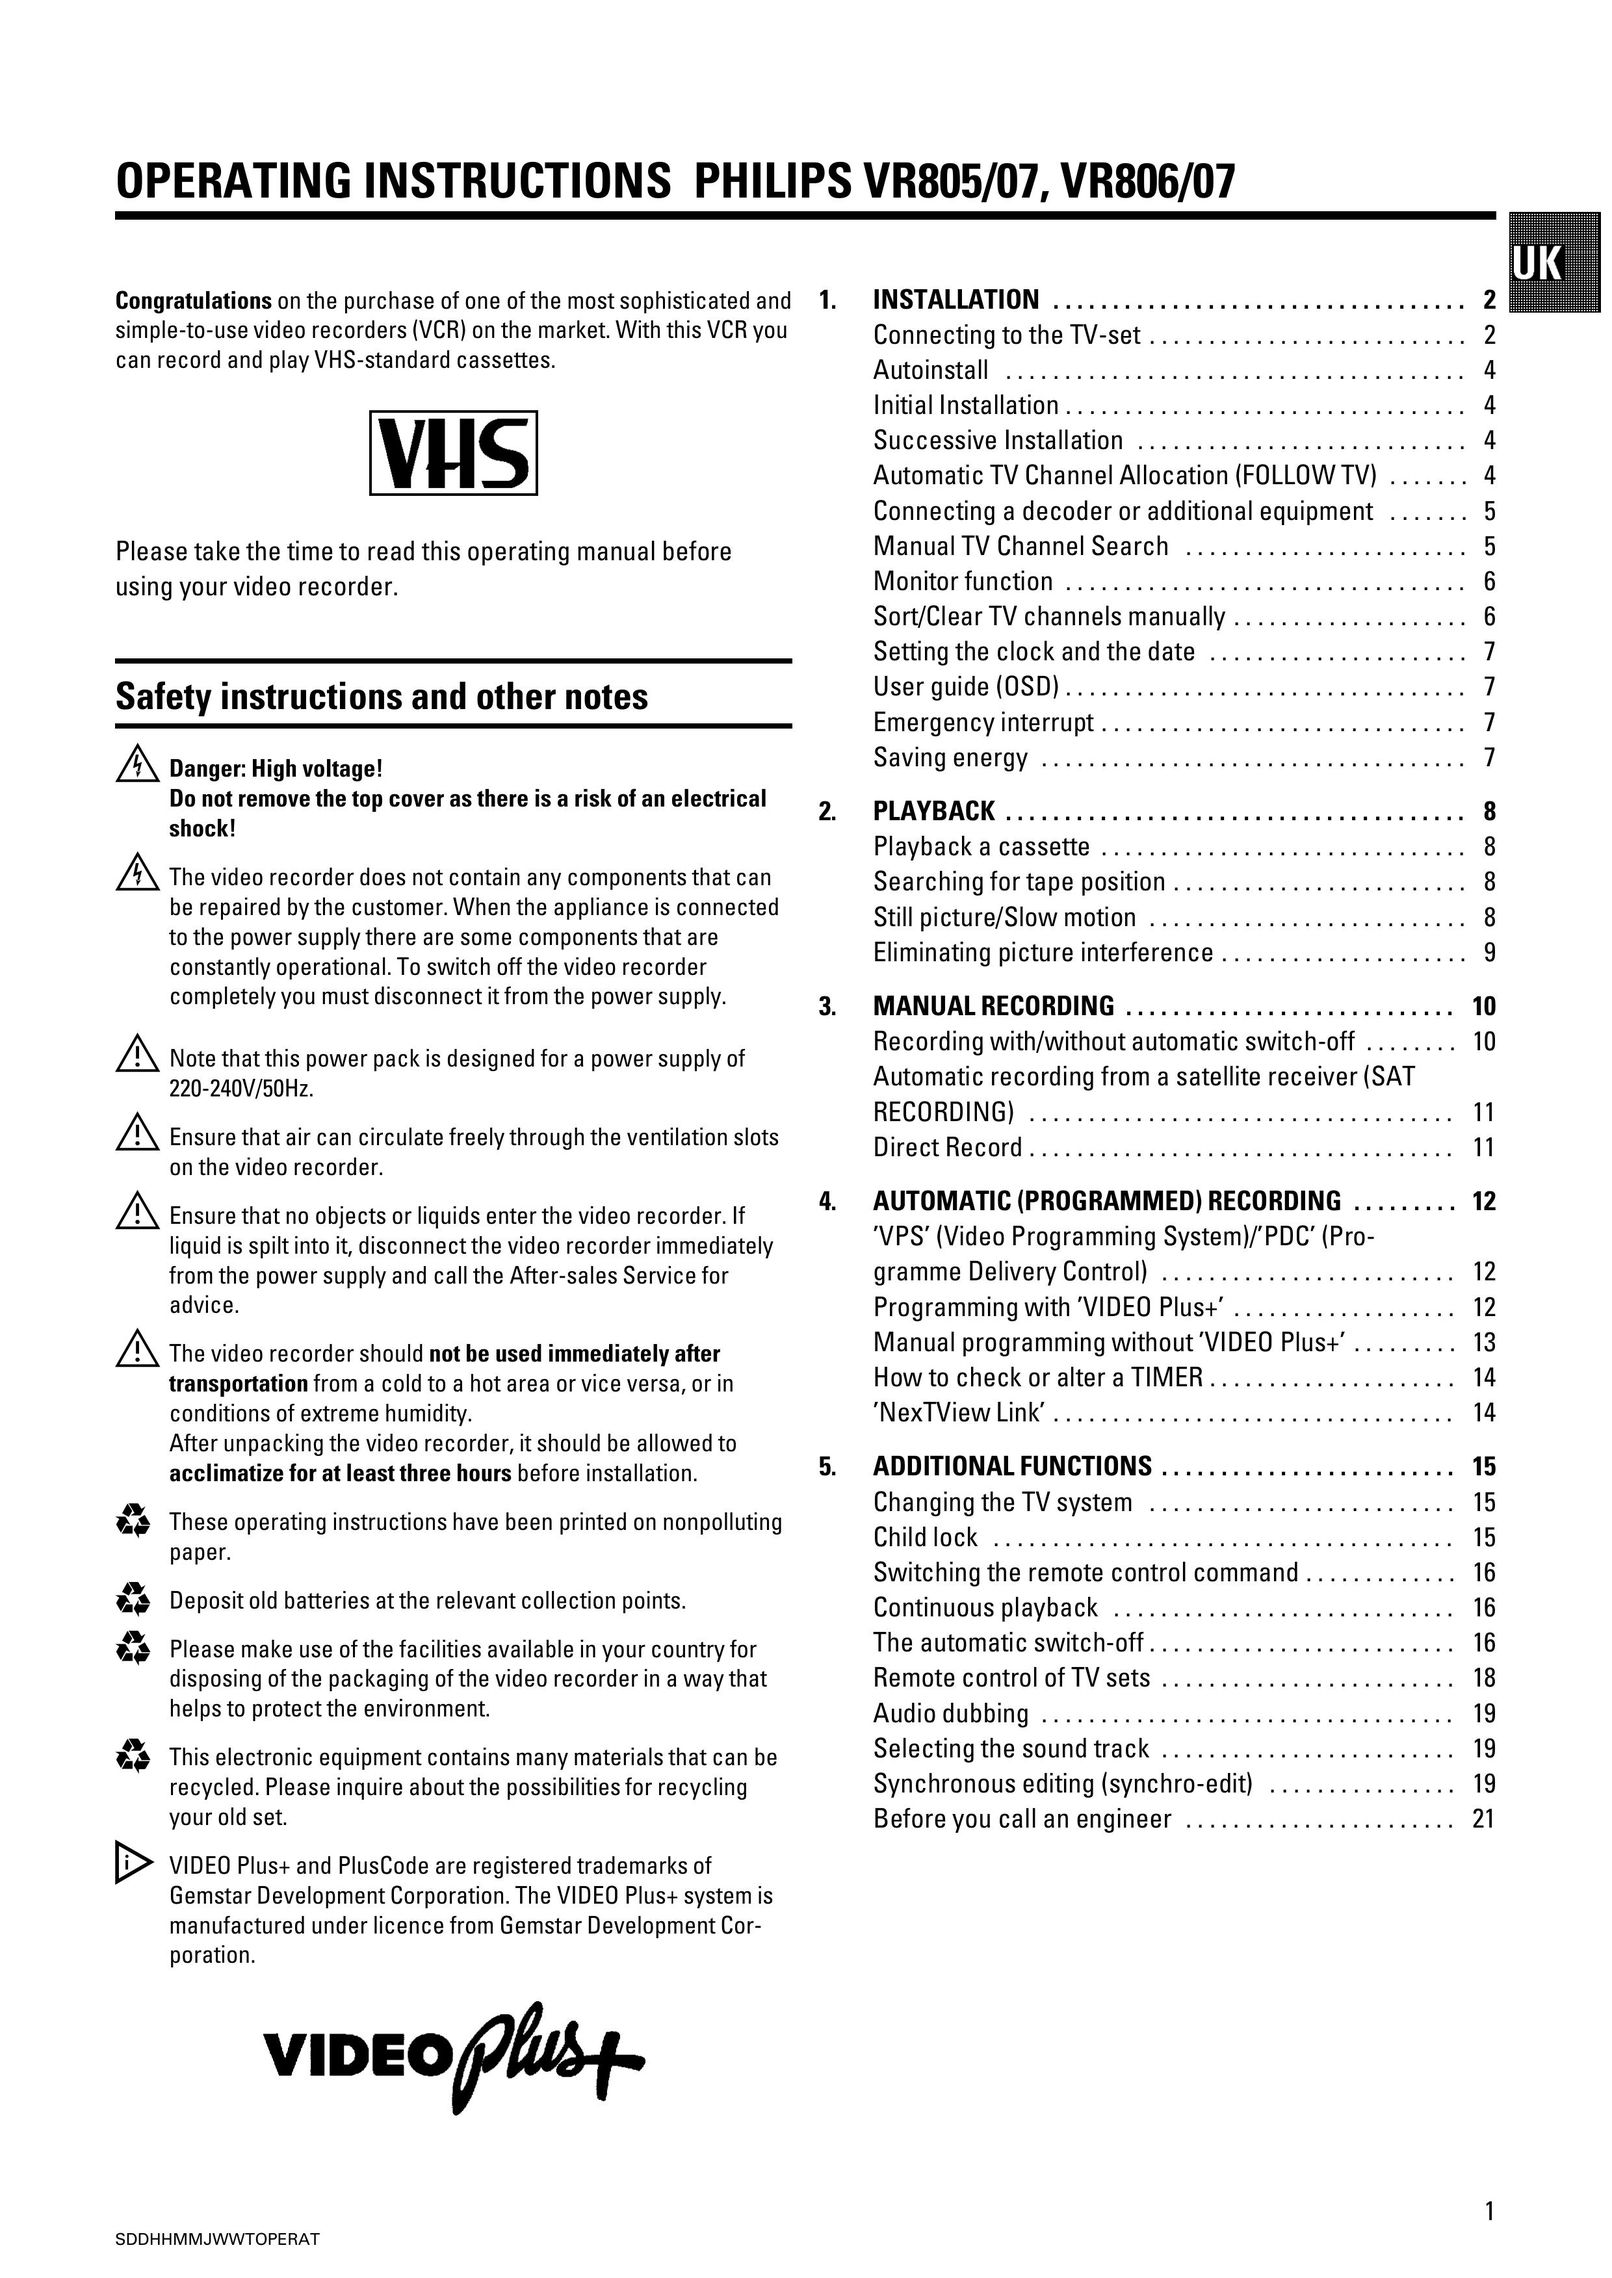 Pioneer VR805/07 VCR User Manual